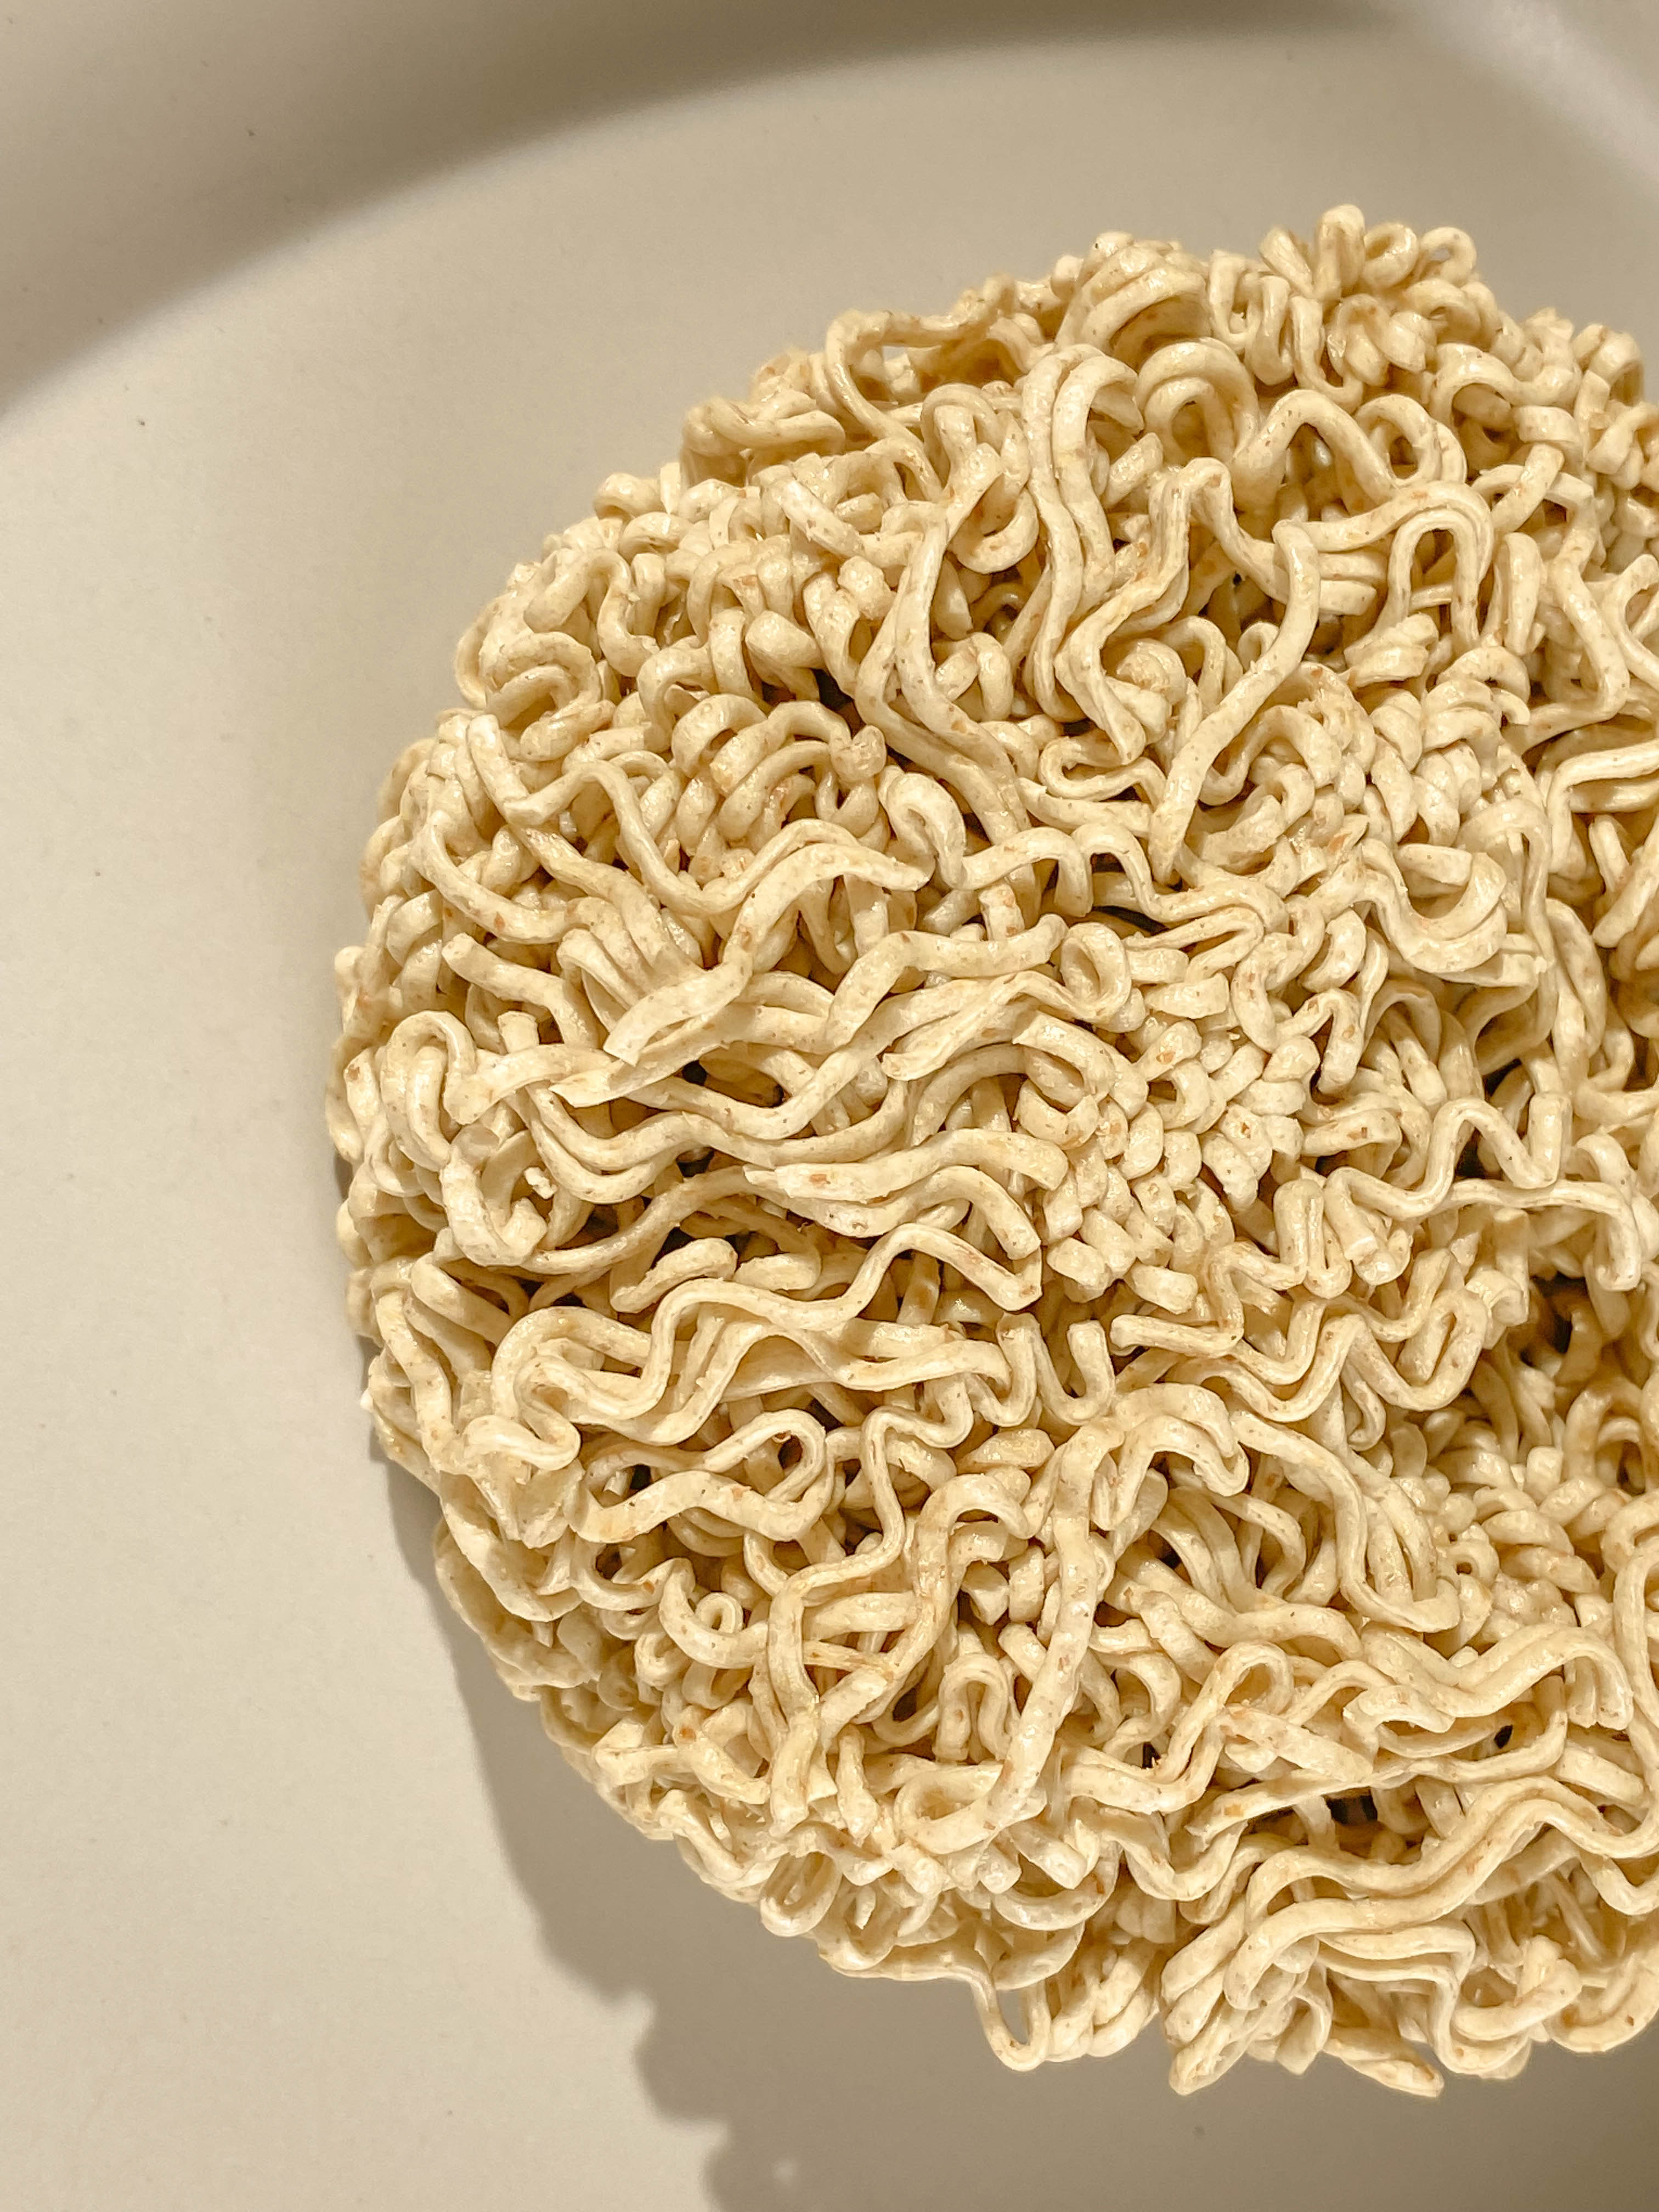 Whole Wheat Instant Noodles: A Healthier Option for Quick Meals